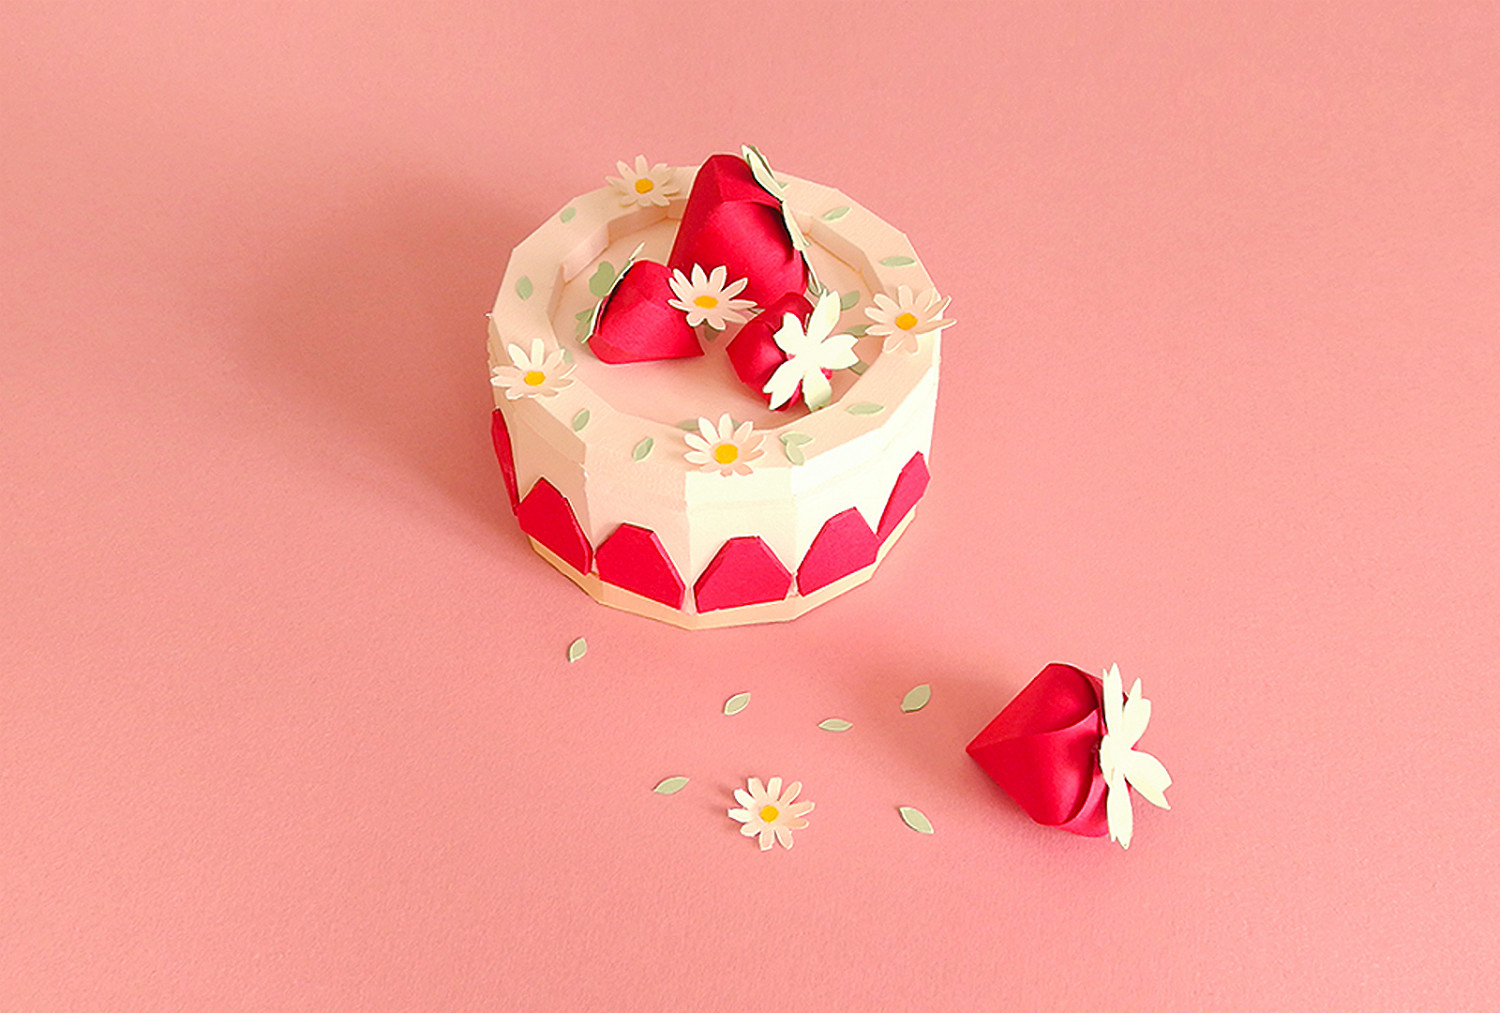 charlotte smith paper sculpture quirky dessert pink